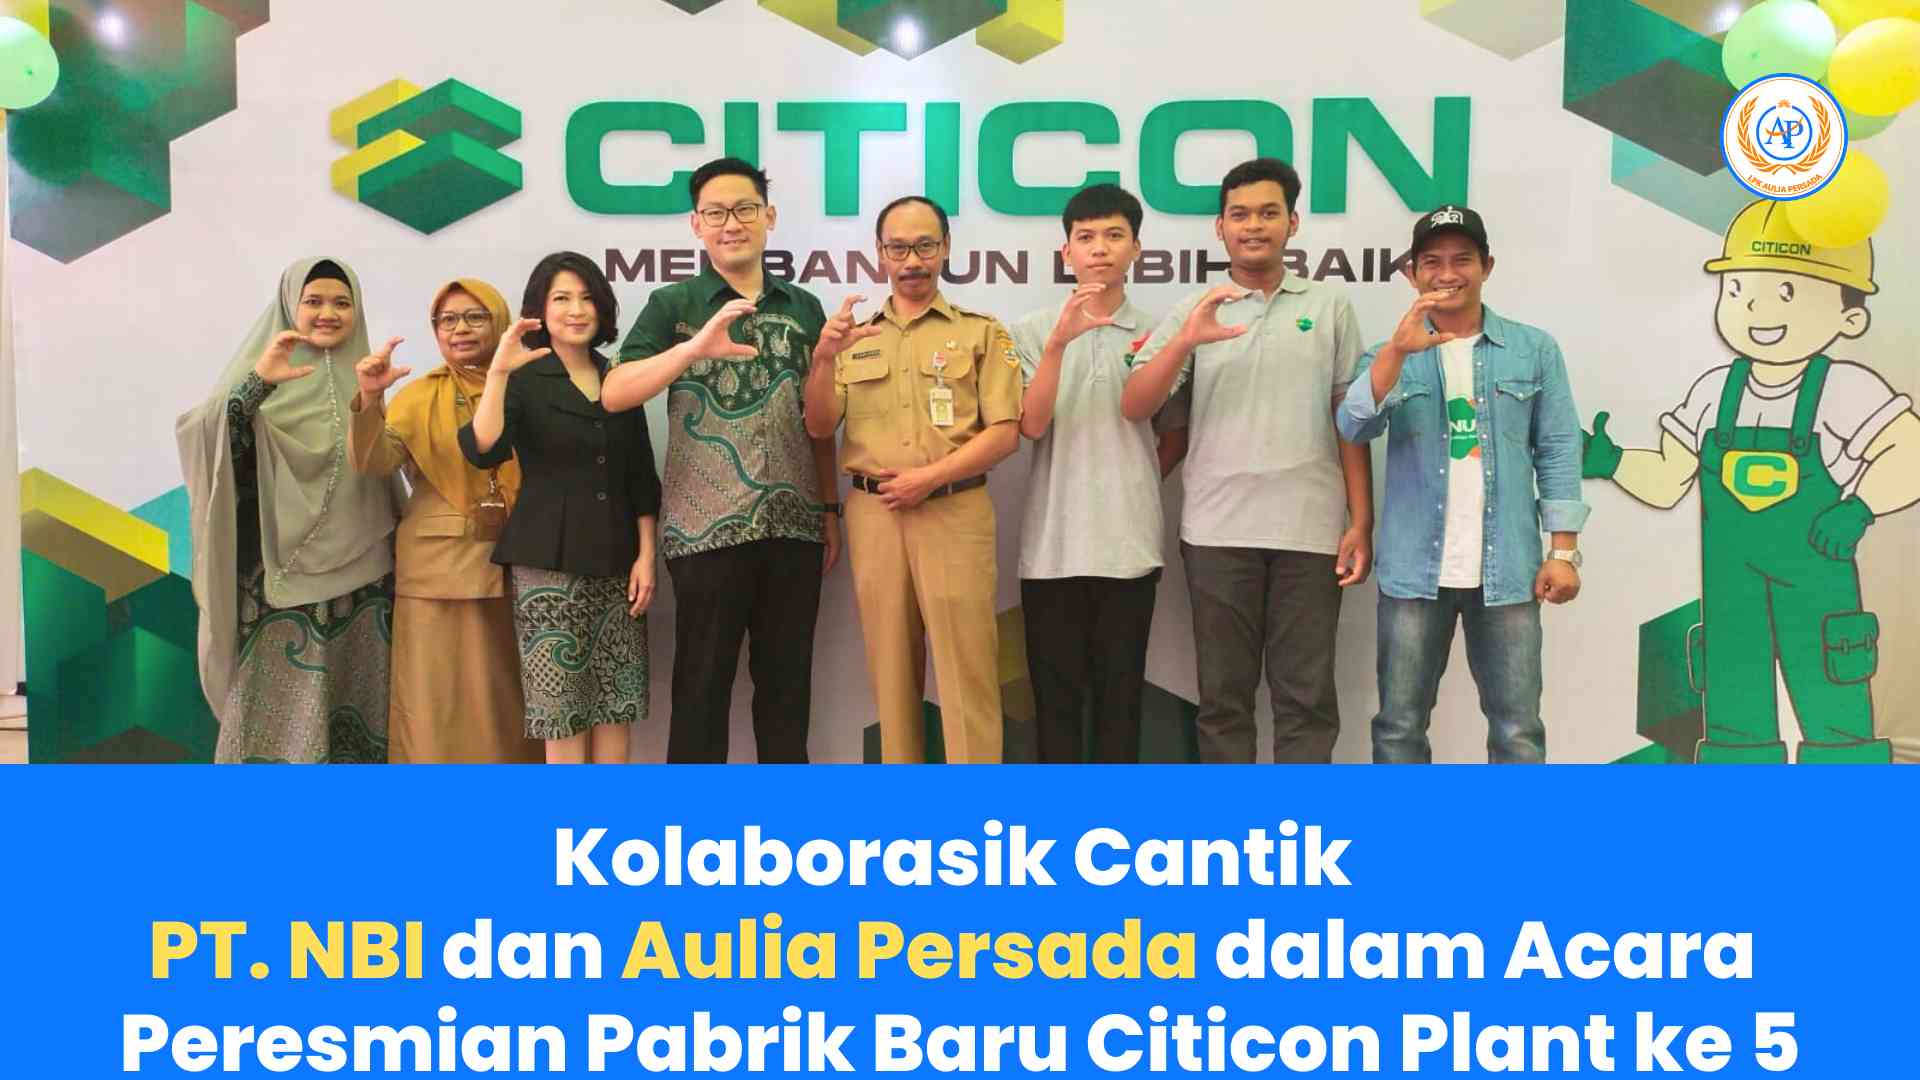 Kolaborasi Cantik PT.NBI dan Aulia Persada, Membangun Keberhasilan Bersama dalam Peresmian Pabrik Citicon Plant ke-5